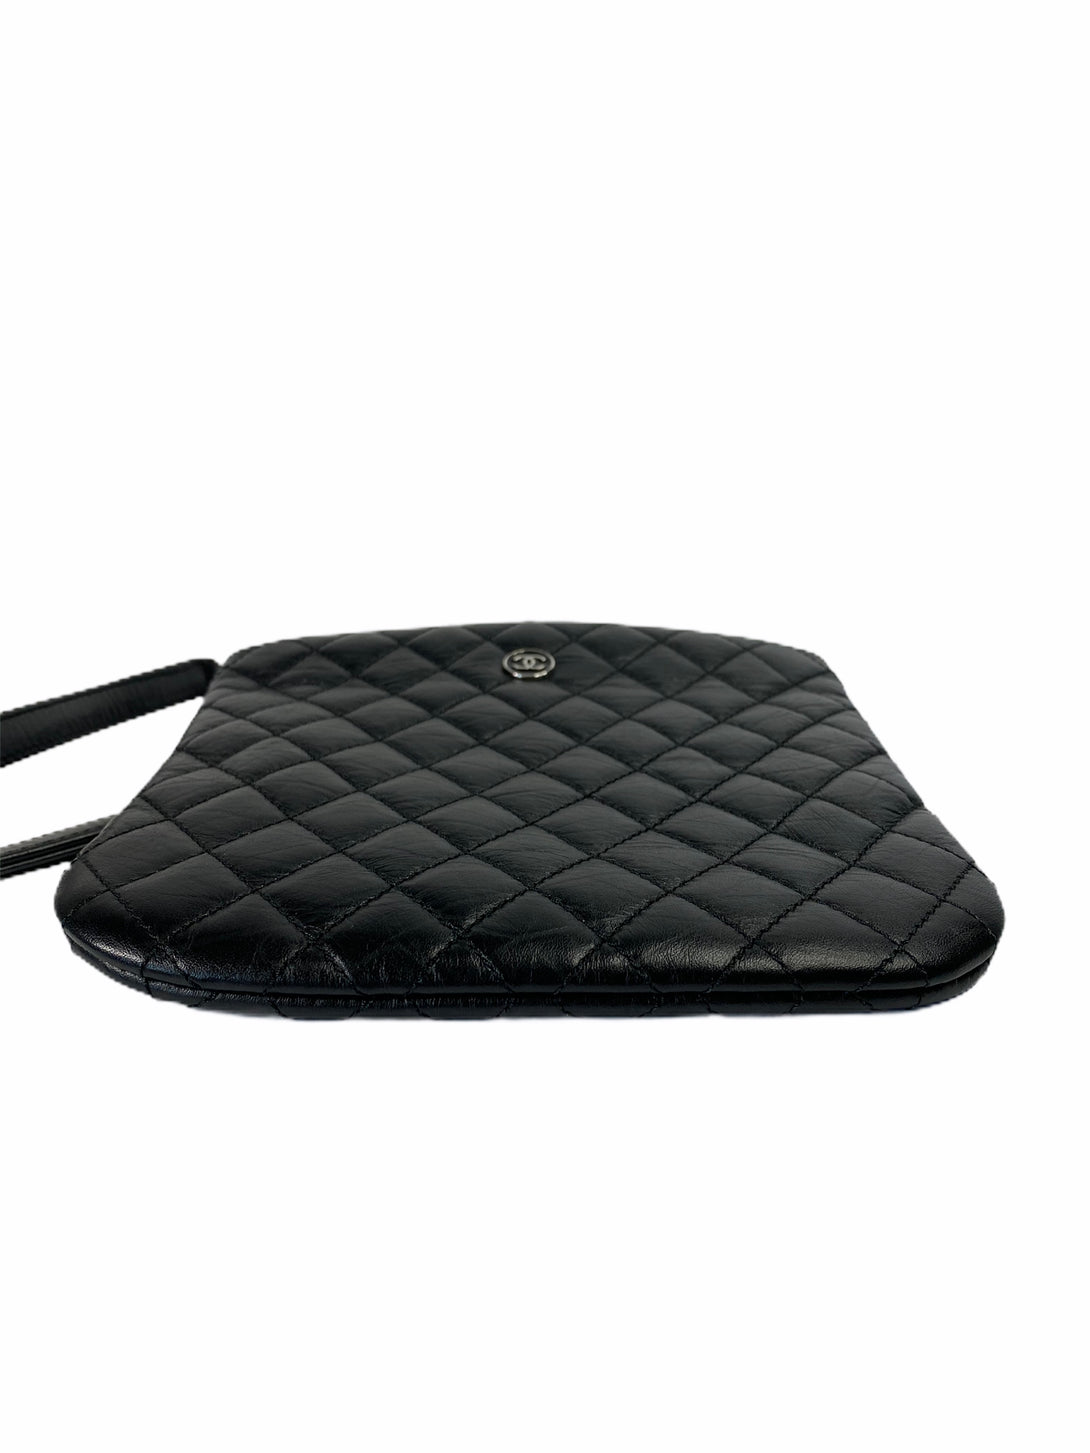 Chanel Black Leather Crossbody - Siopaella Designer Exchange